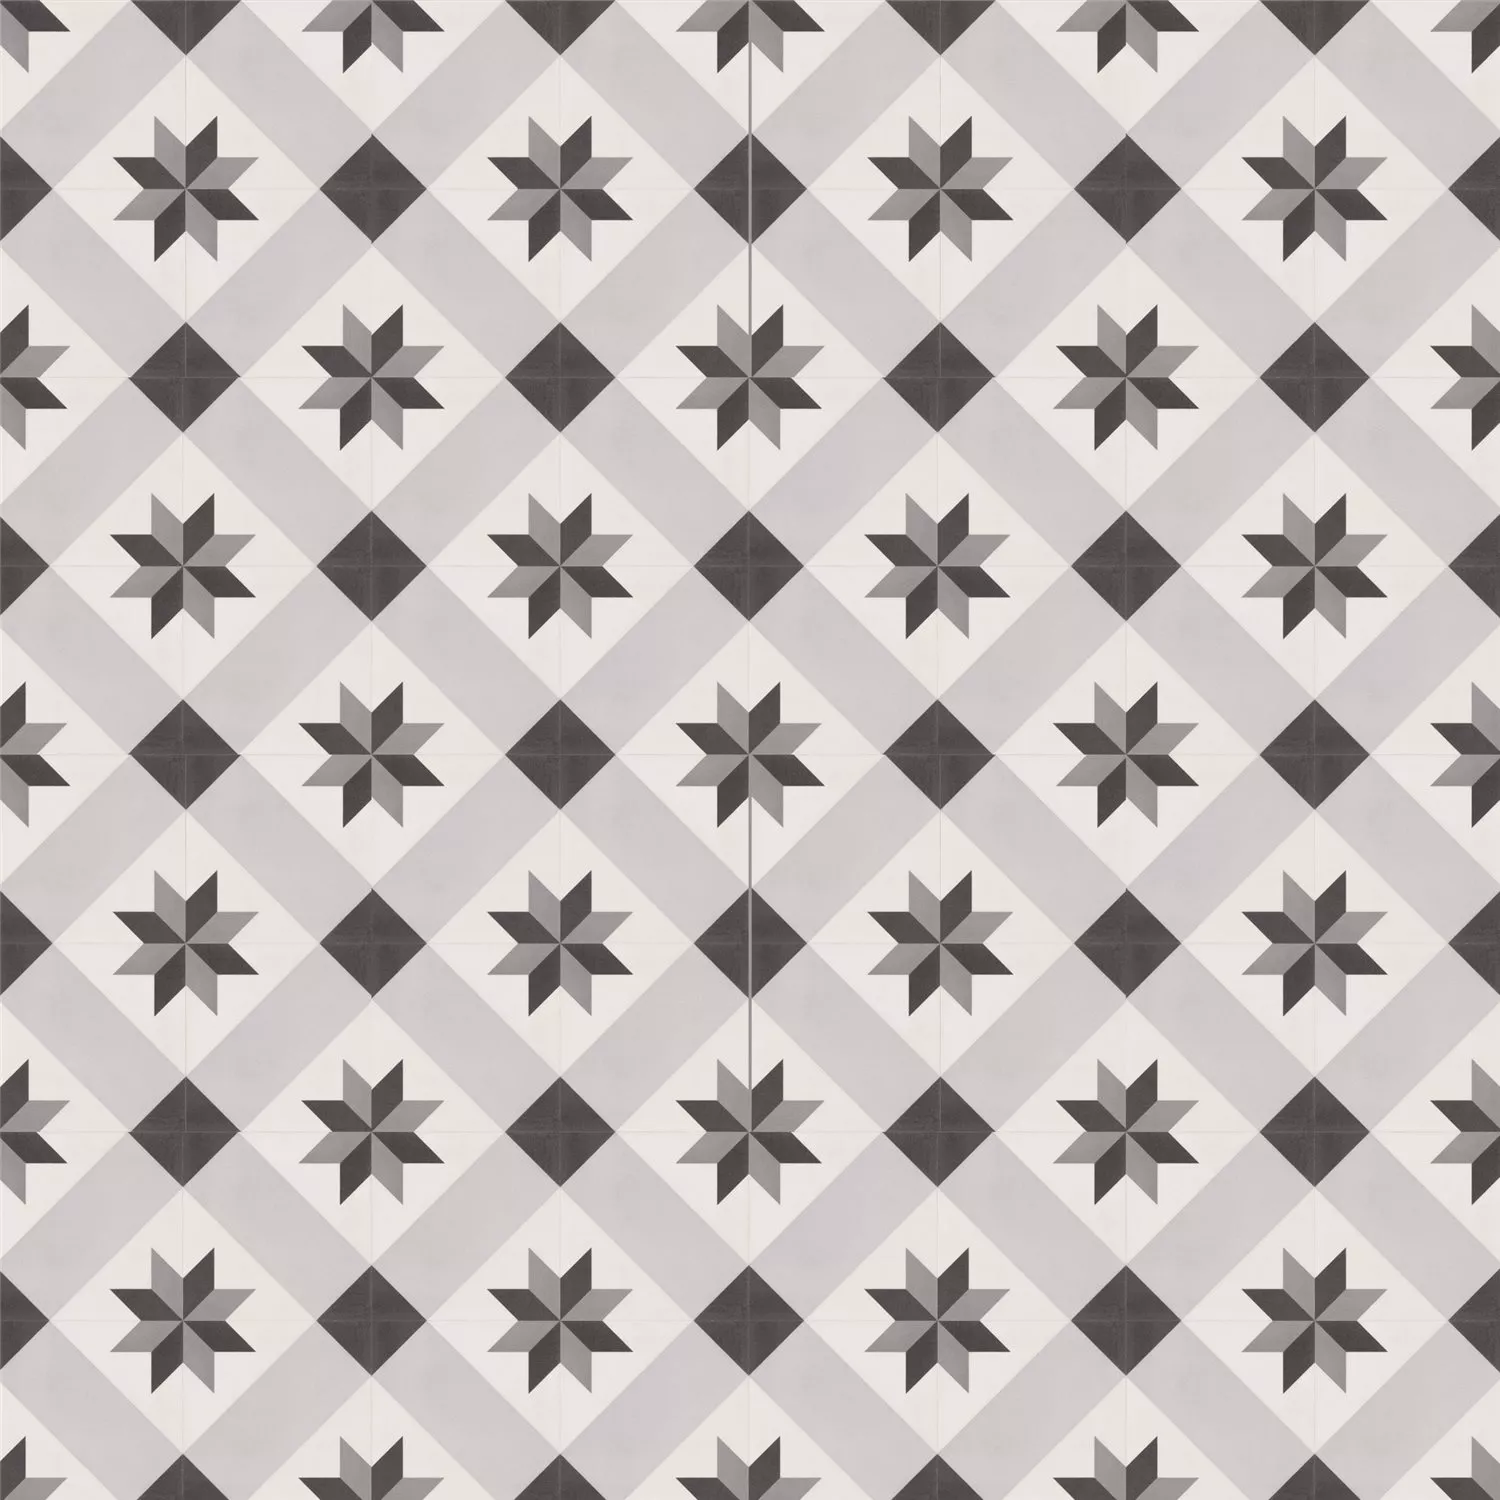 Sample Cement Tiles Optic Arena Floor Tiles Climont 18,6x18,6cm